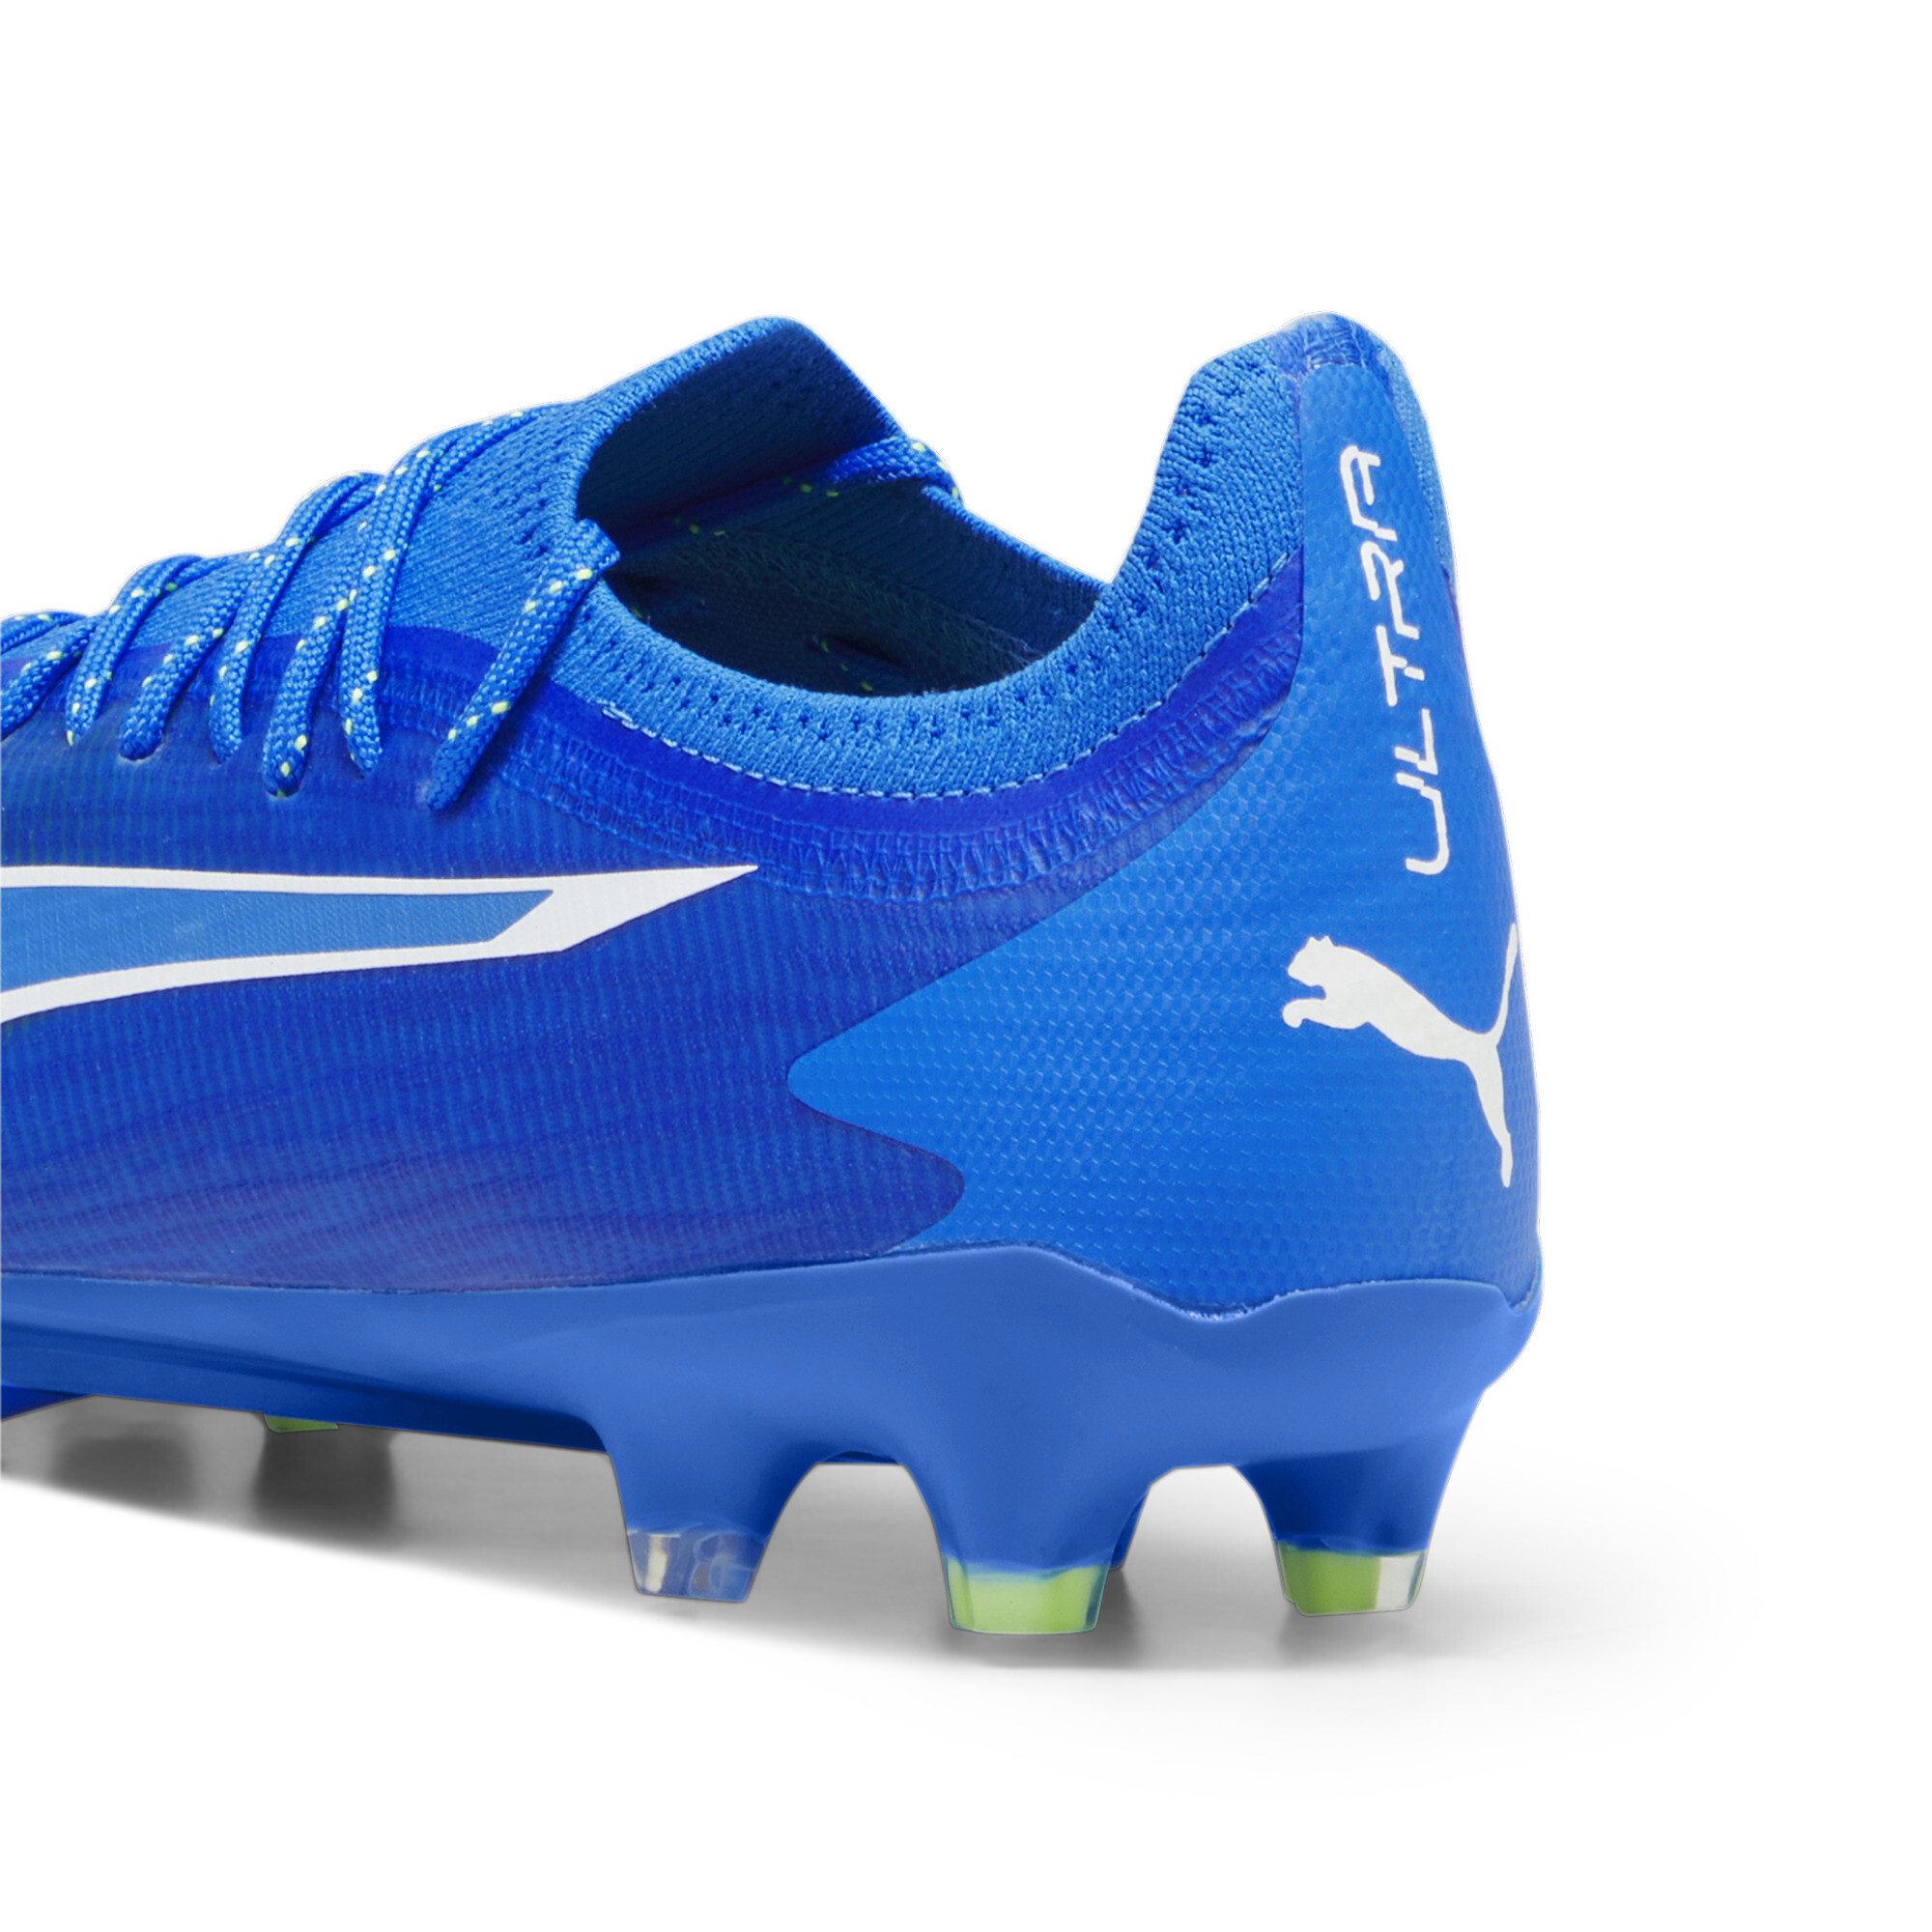 Men's PUMA ULTRA ULTIMATE FG/AG Football Boots In Blue, Size EU 46.5